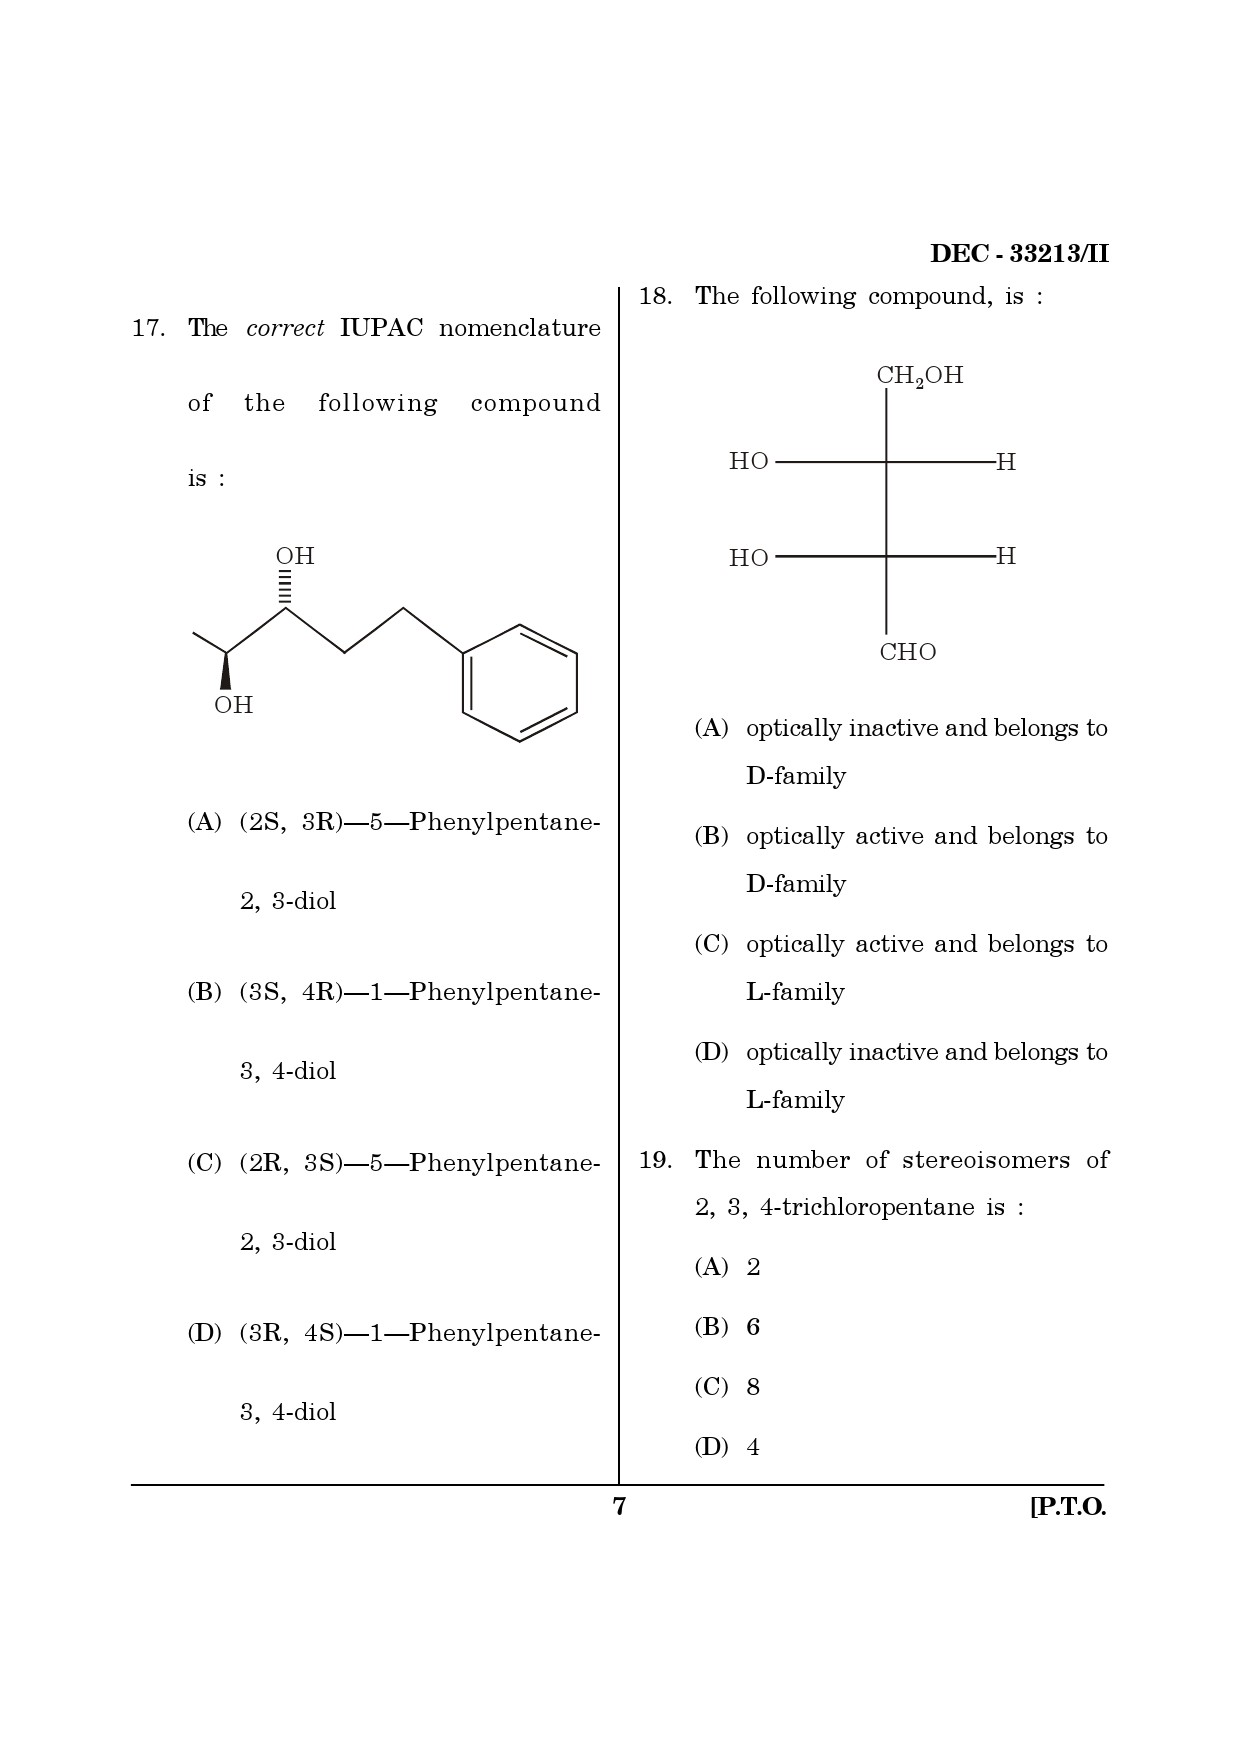 Maharashtra SET Chemical Sciences Question Paper II December 2013 6